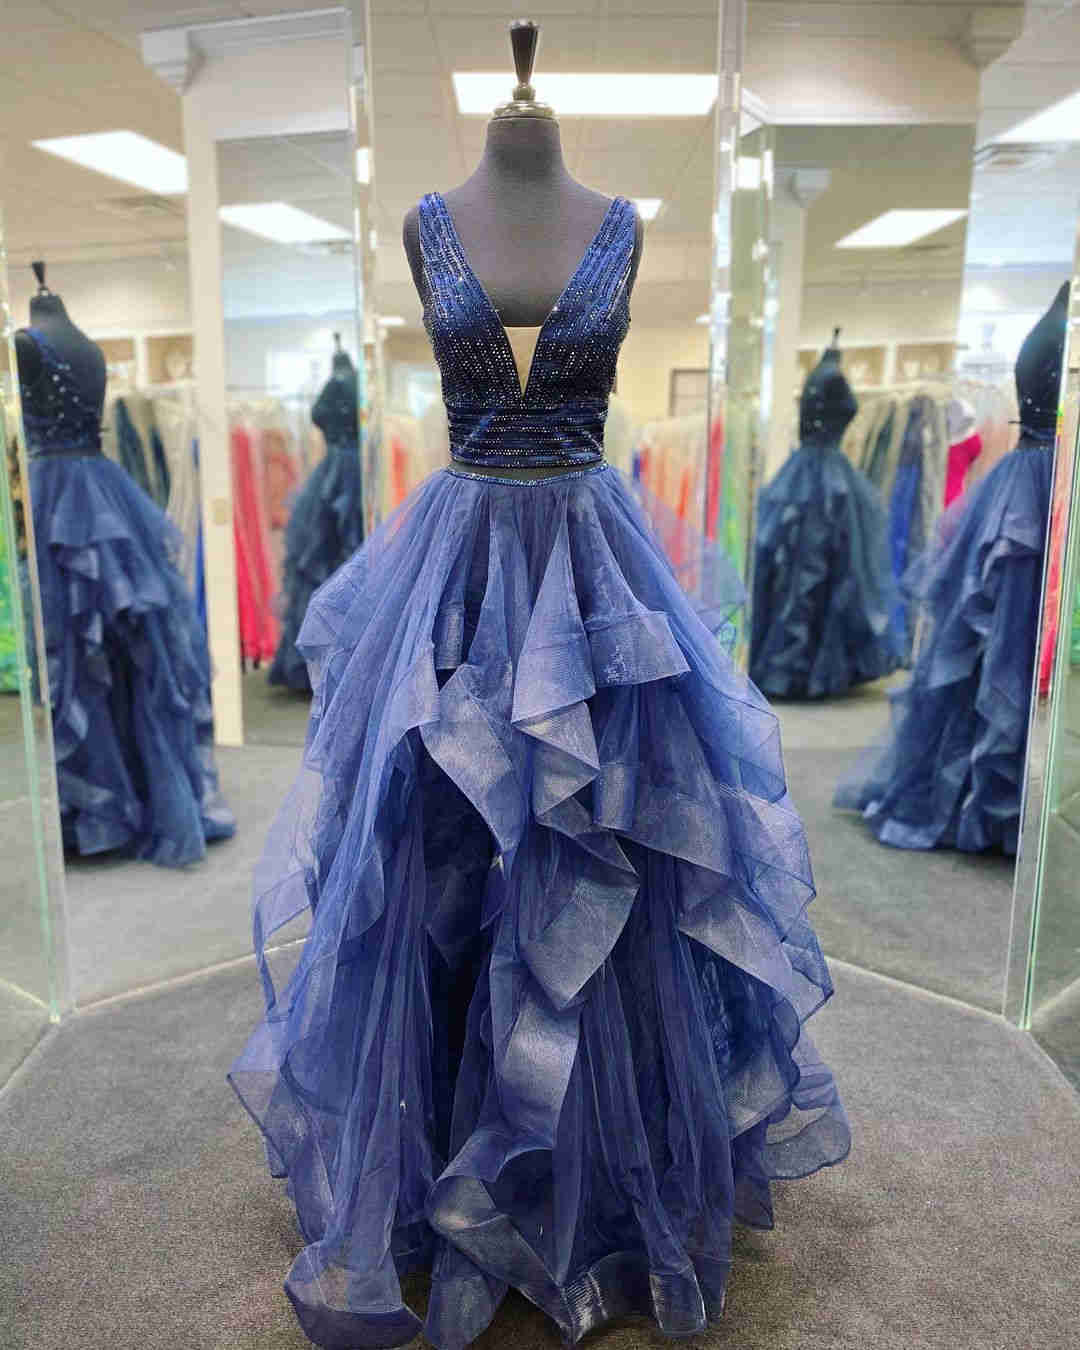 Glitter Plunging Neck Purple Beaded Prom Dress?Glitter Plunging Neck Purple Beaded Prom Dress?long dress,cheap dress,evening dress,bridal dress,prom dress 2021